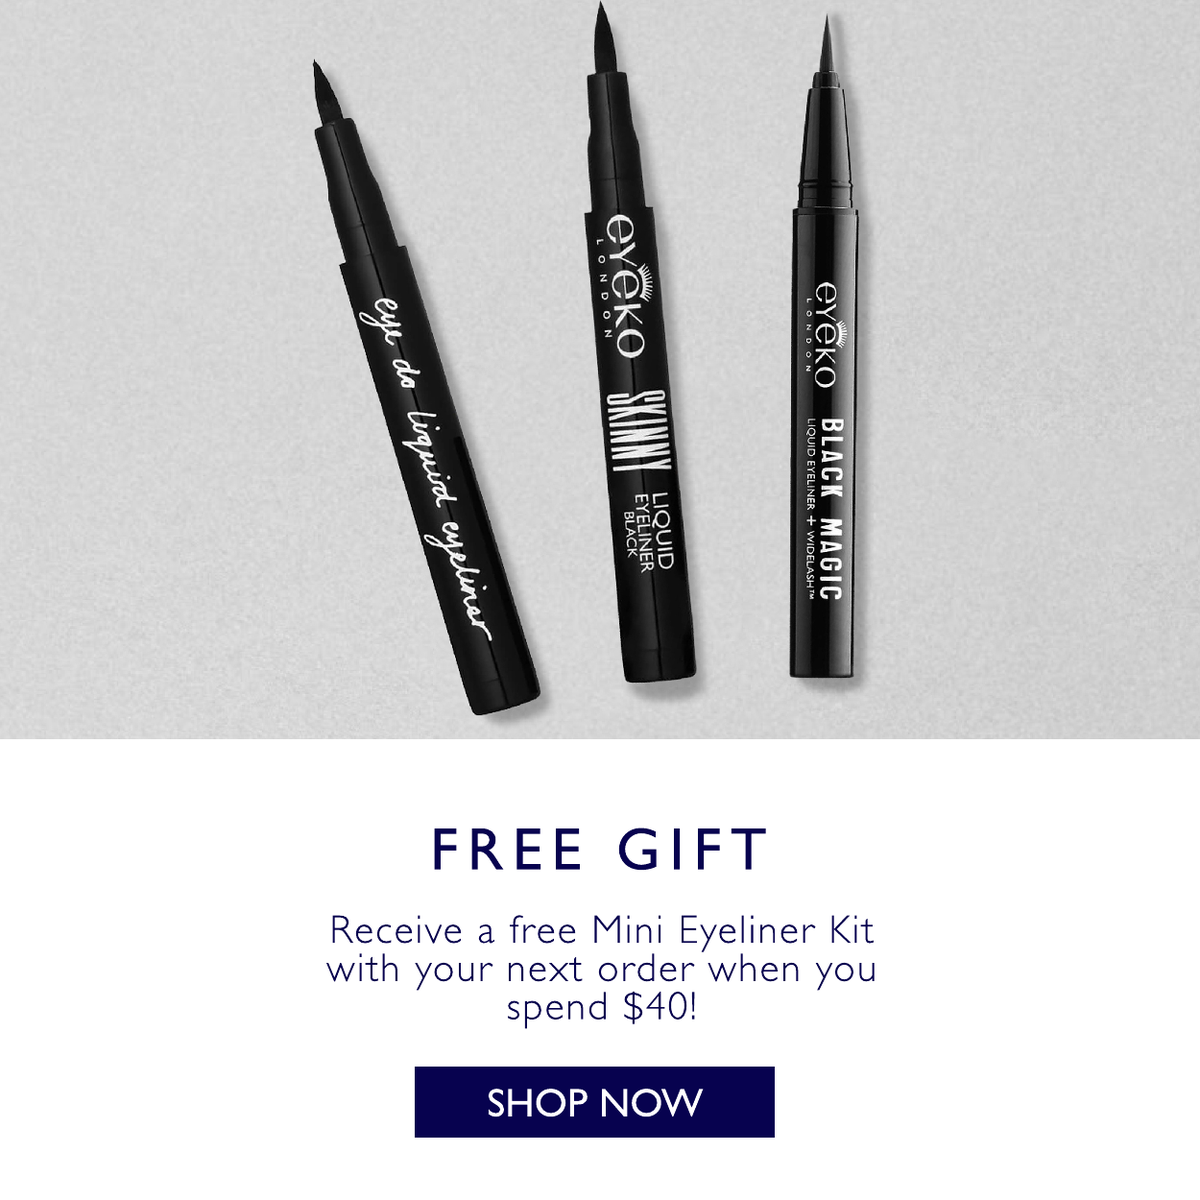 Free Mini Eyeliner Kit when you spend $40